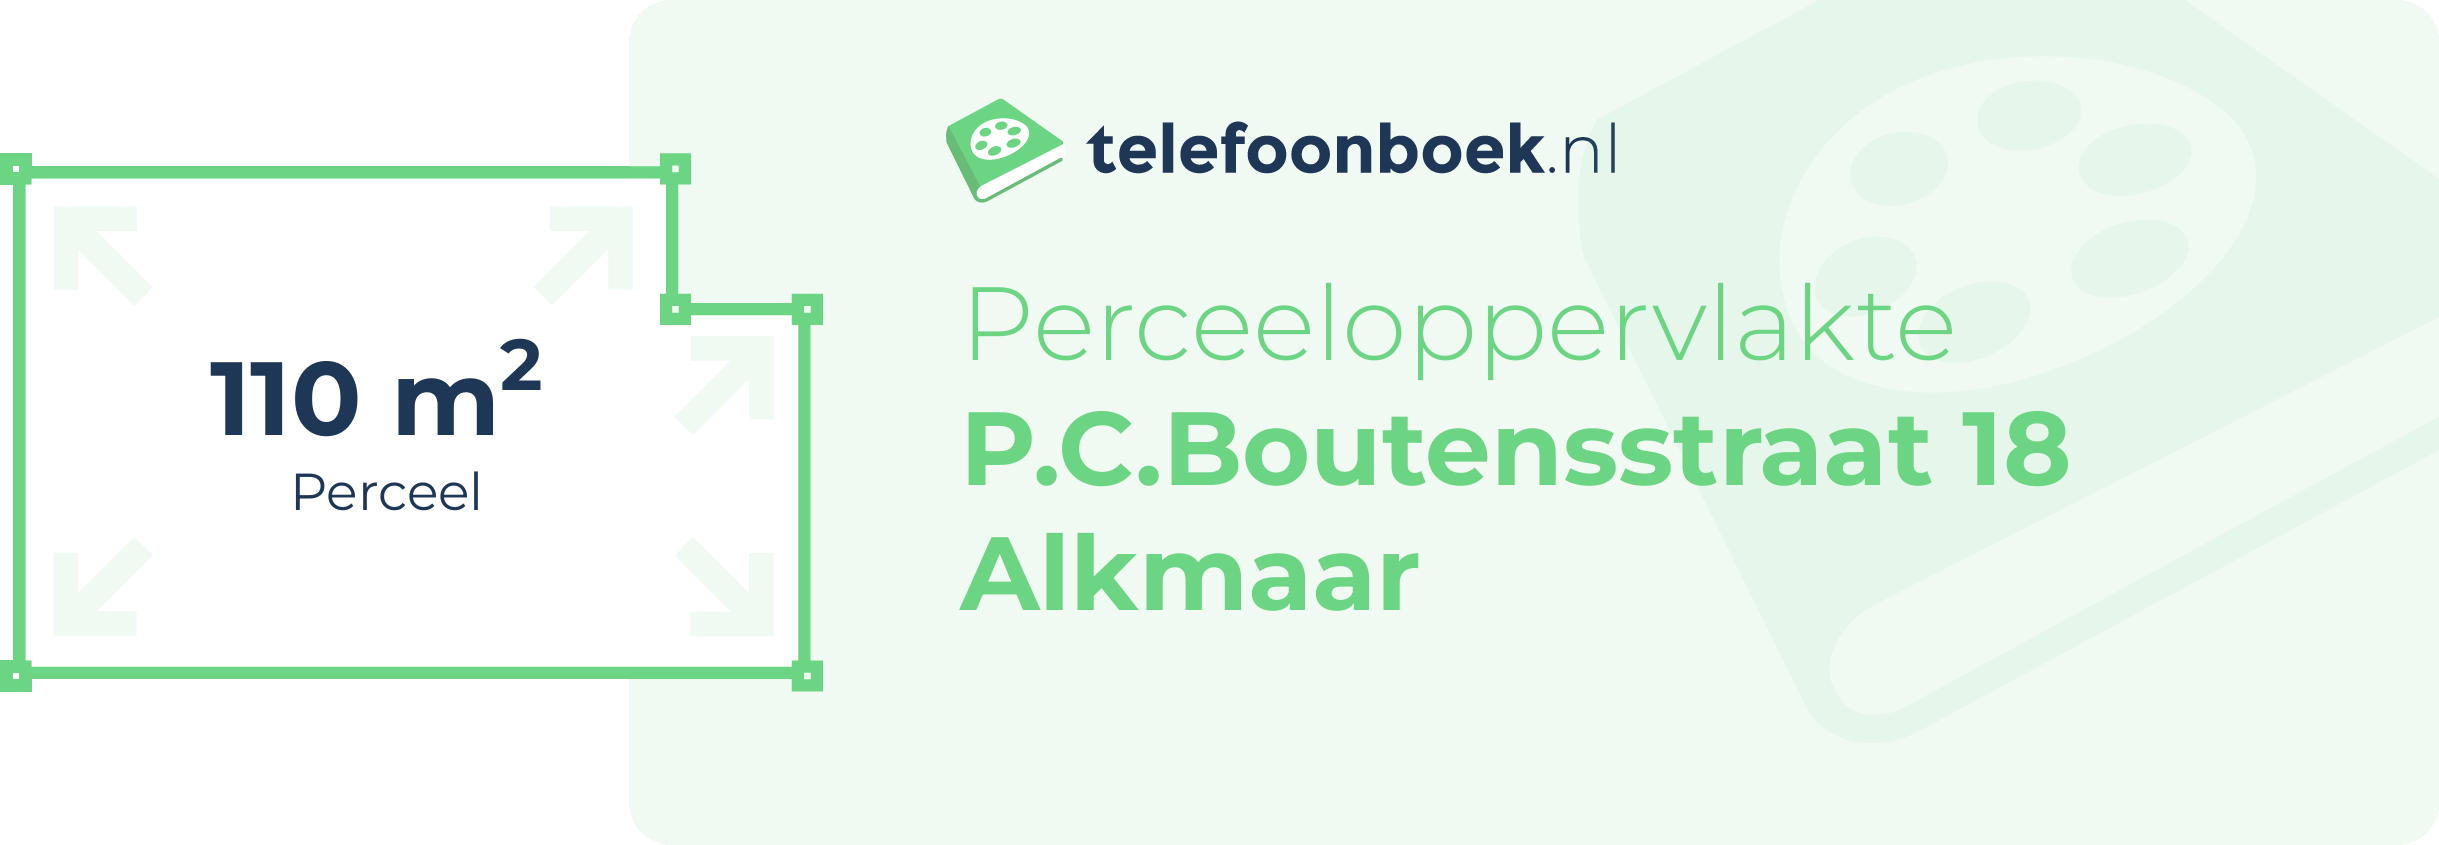 Perceeloppervlakte P.C.Boutensstraat 18 Alkmaar